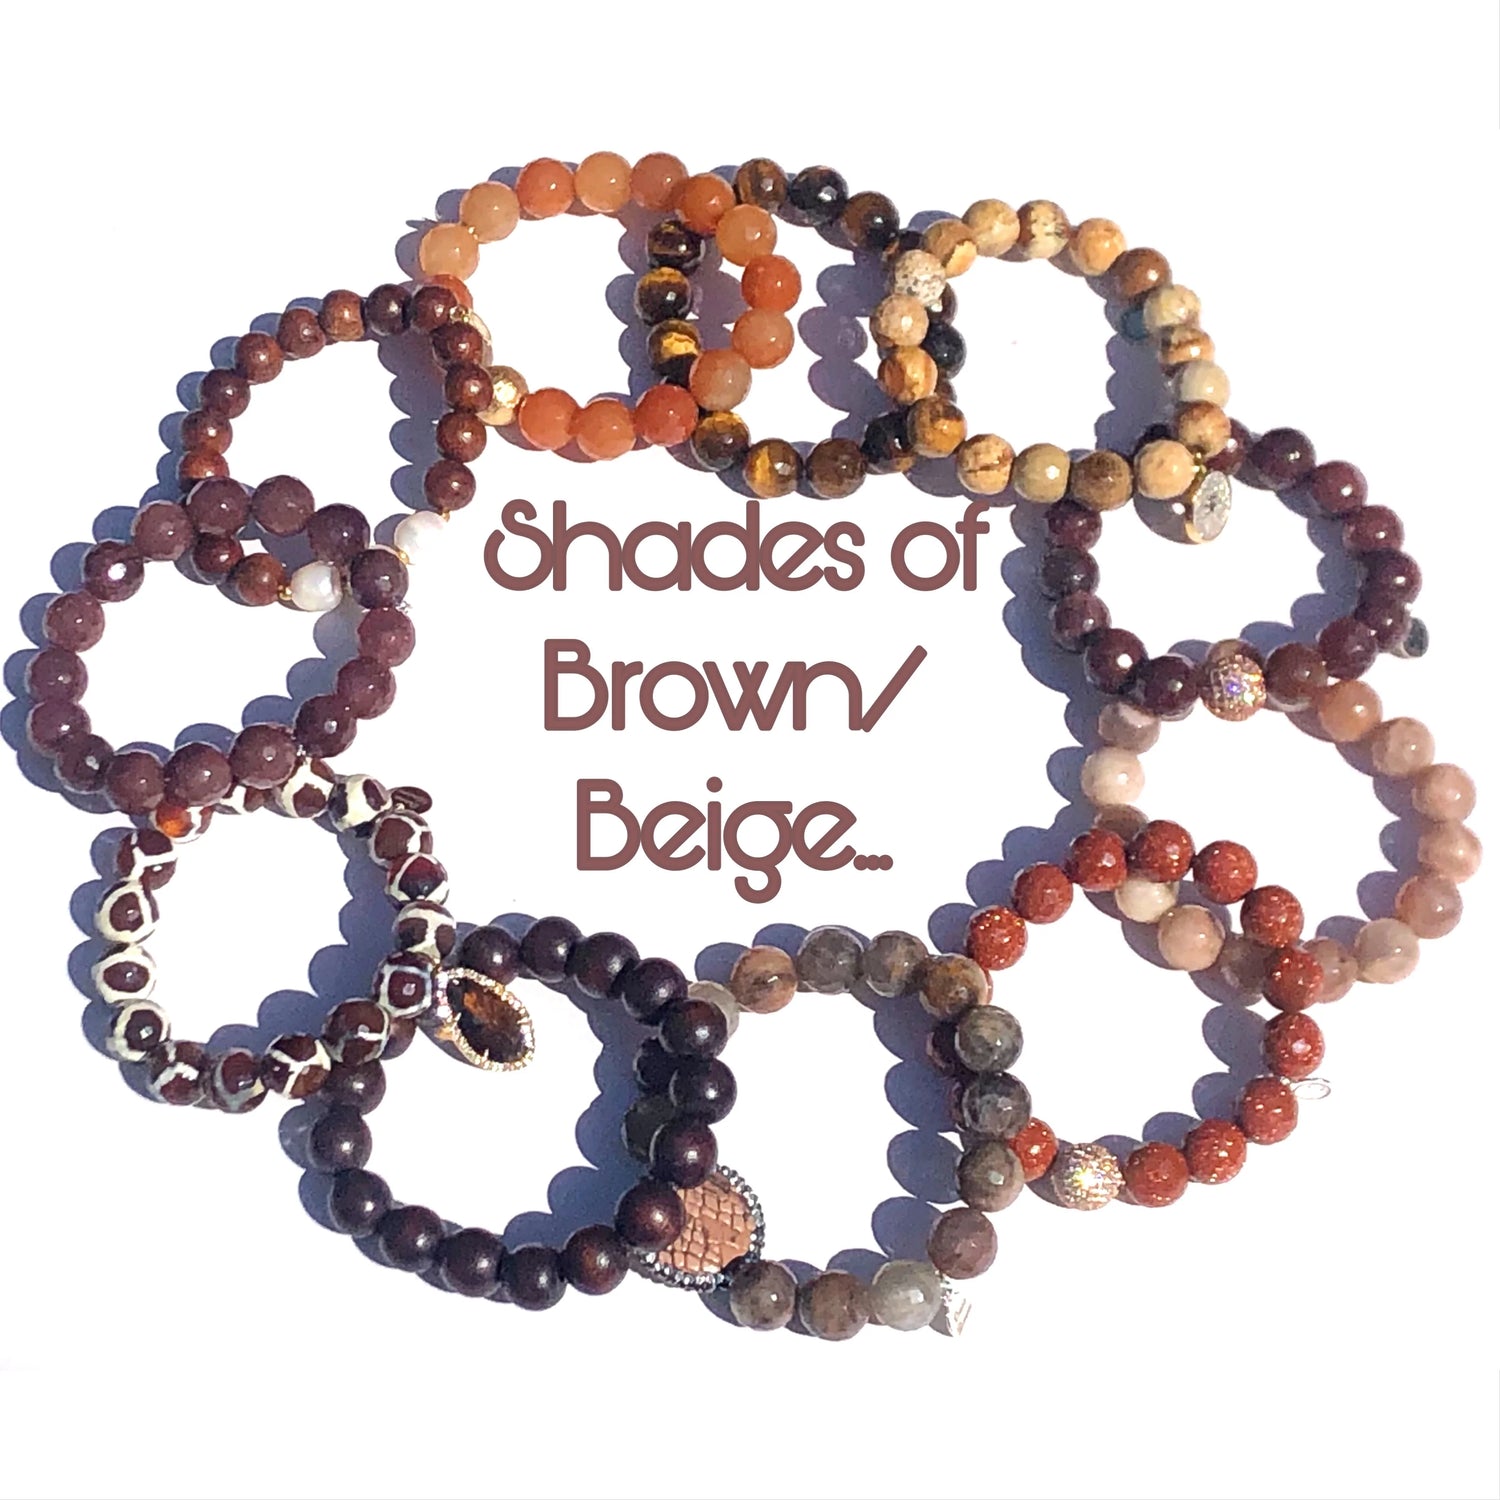 Shades of Beige/Brown